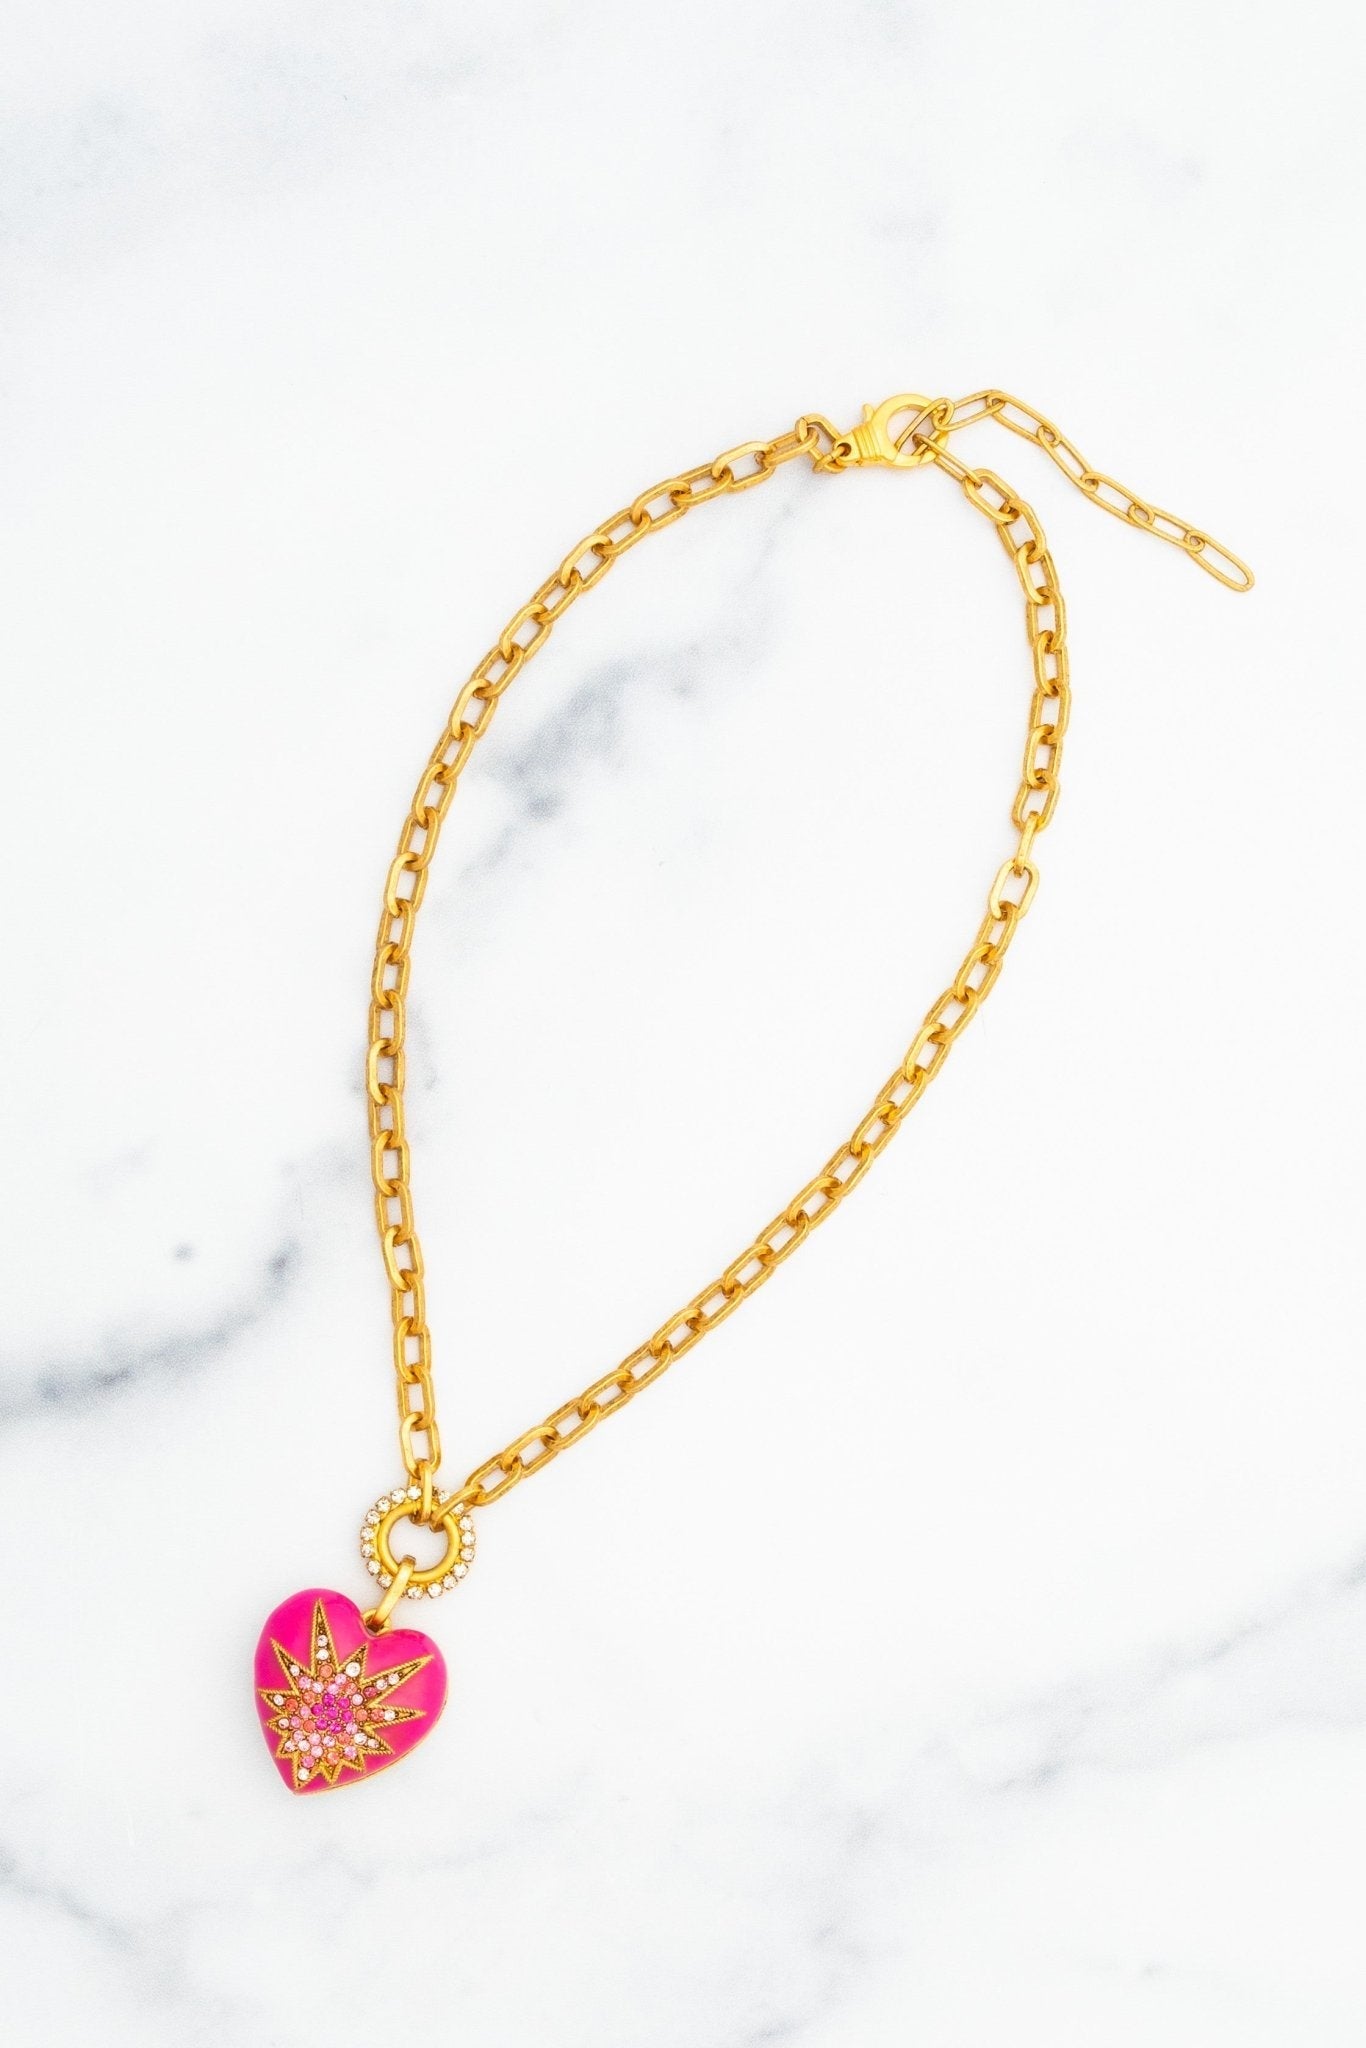 Elizabeth Cole Jewelry - Heart of Tefiti Necklace, Pink